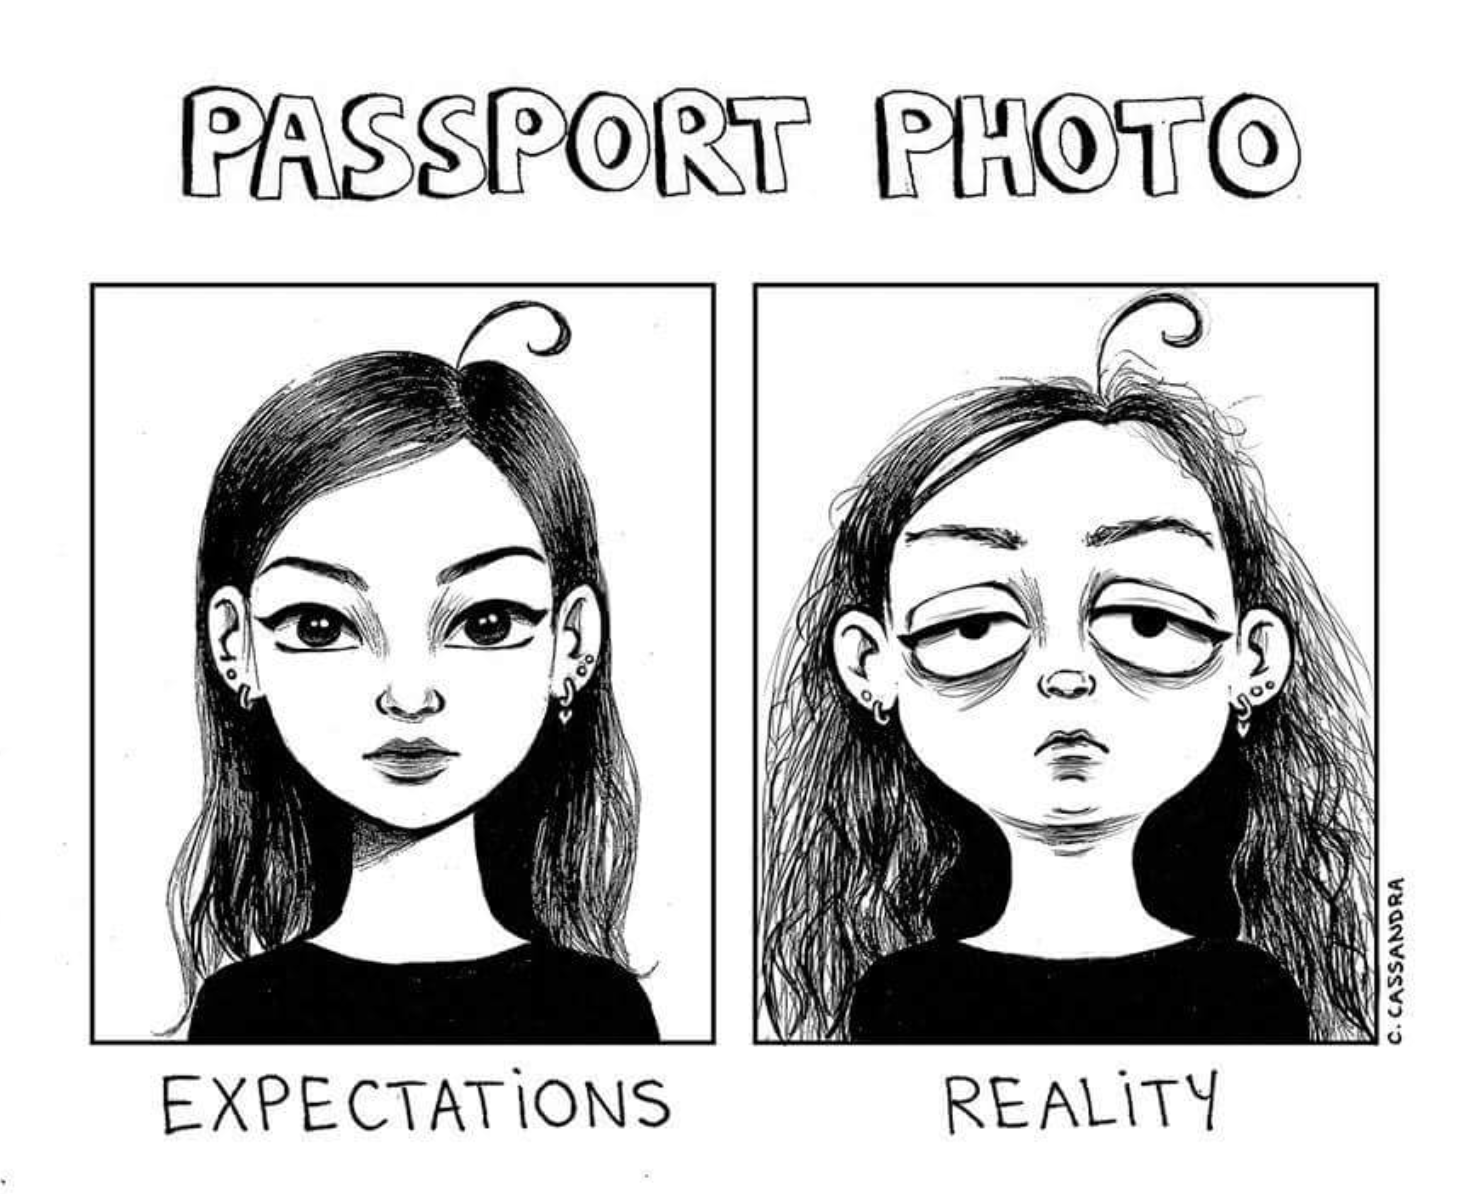 meme - cassandra c - Passport Photo C. Cassandra Expectations Reality